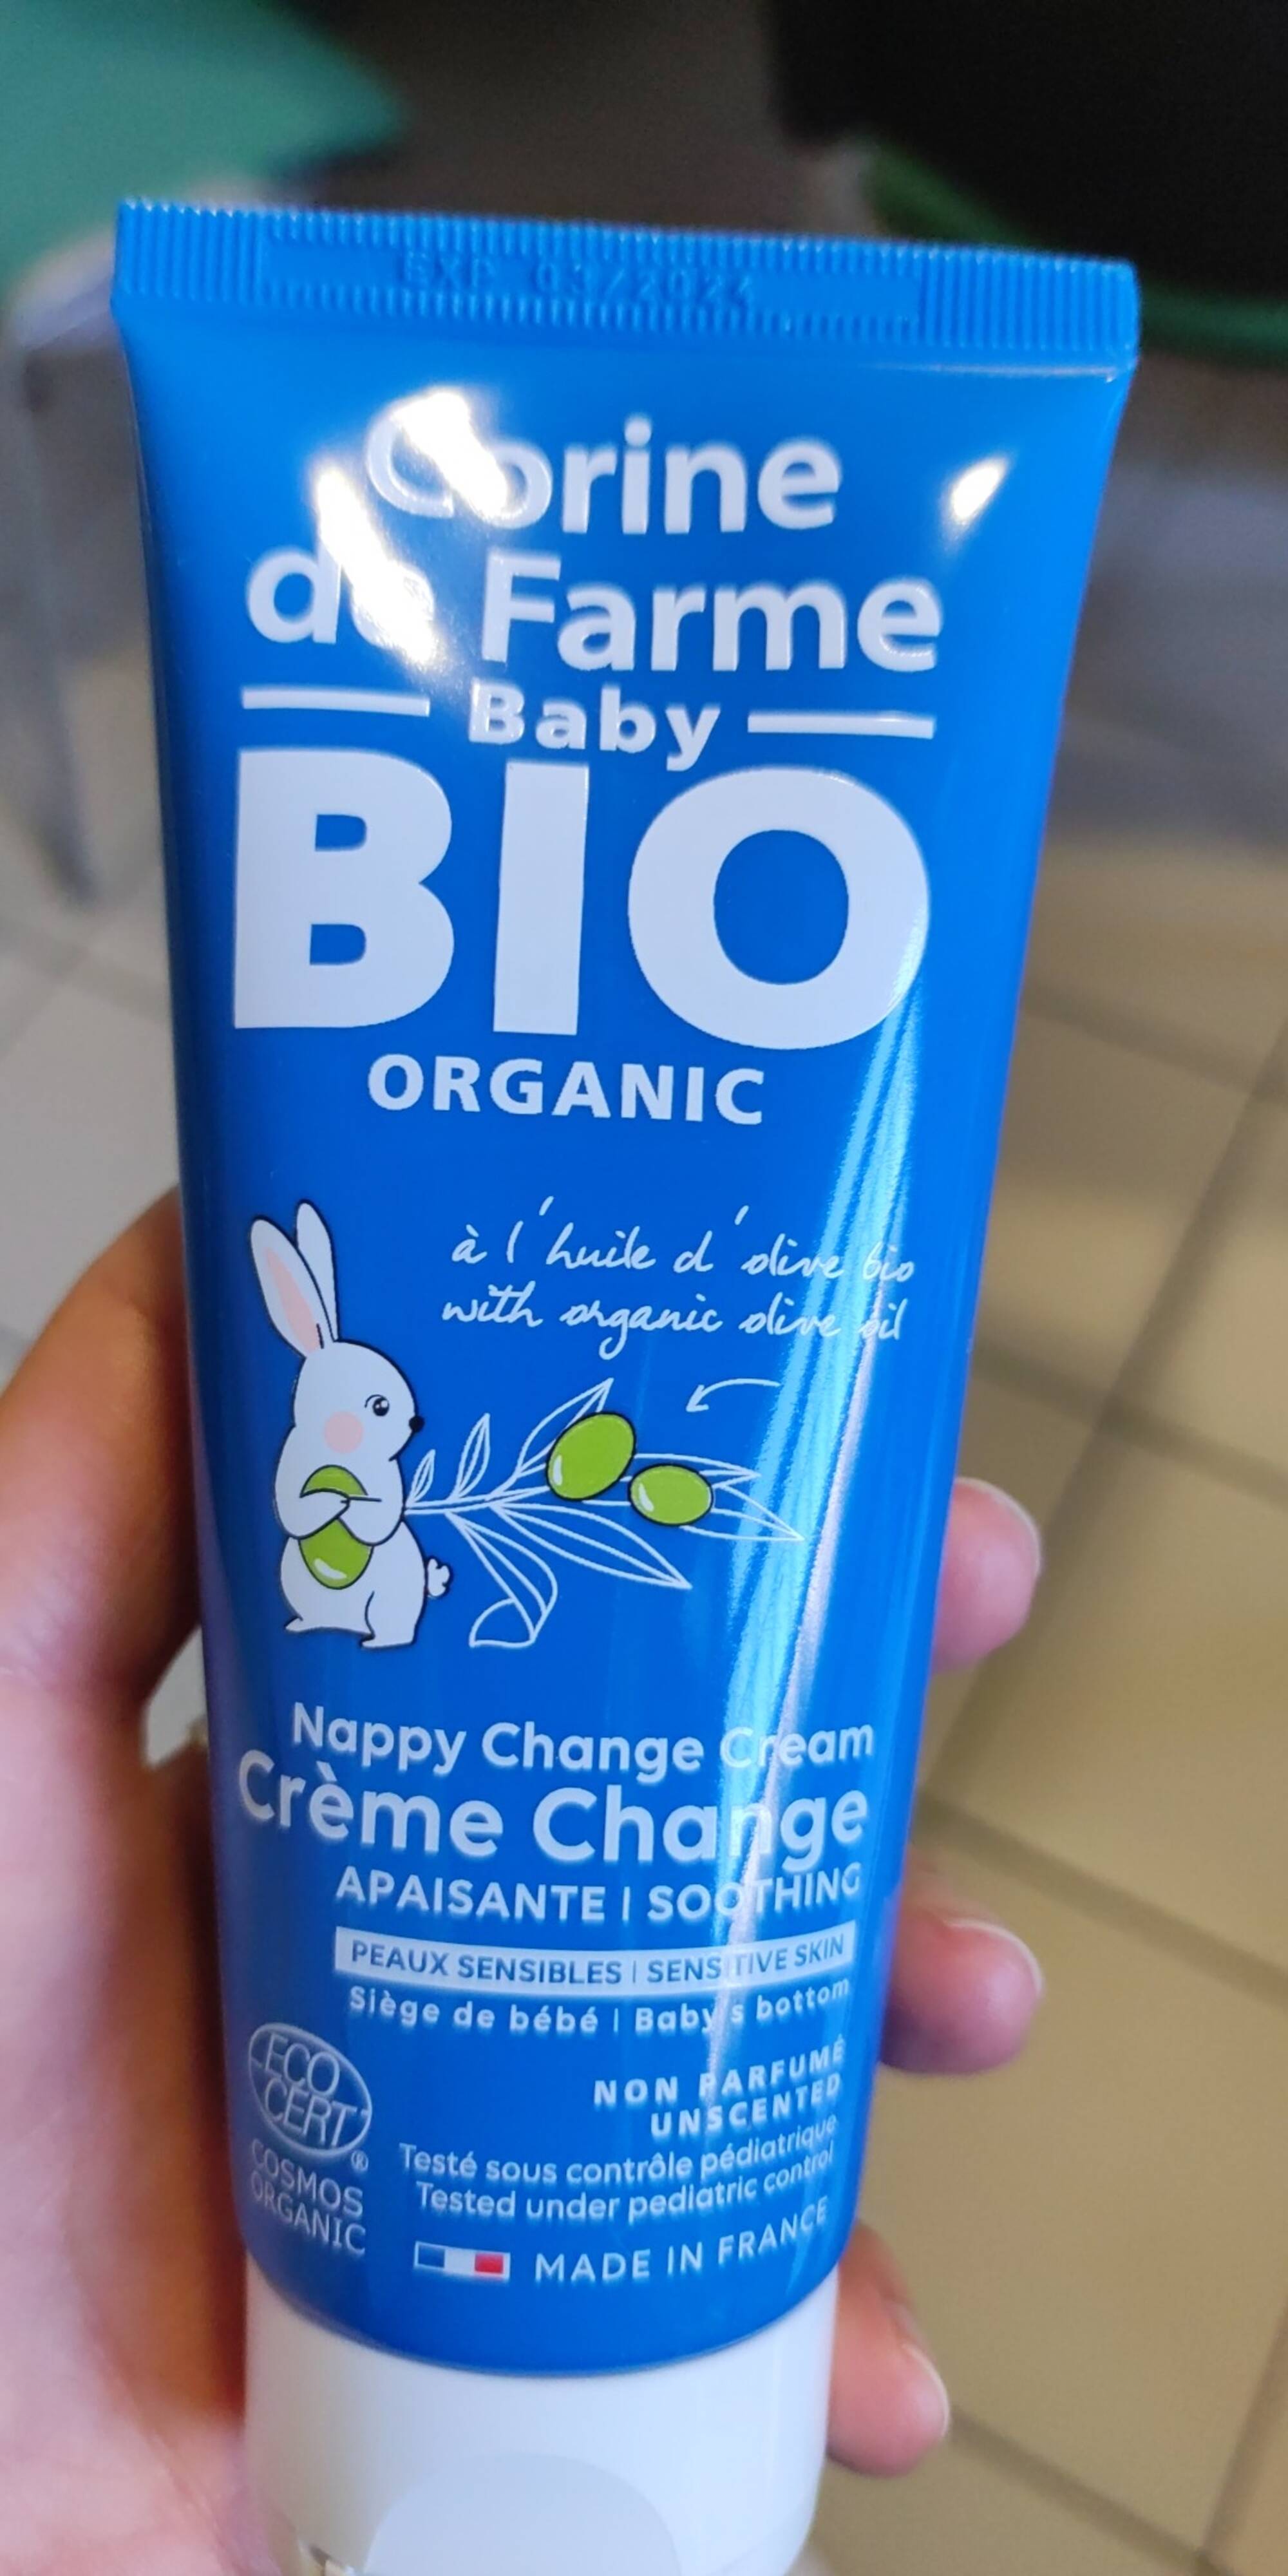 CORINE DE FARME - Baby Bio organic - Crème de change